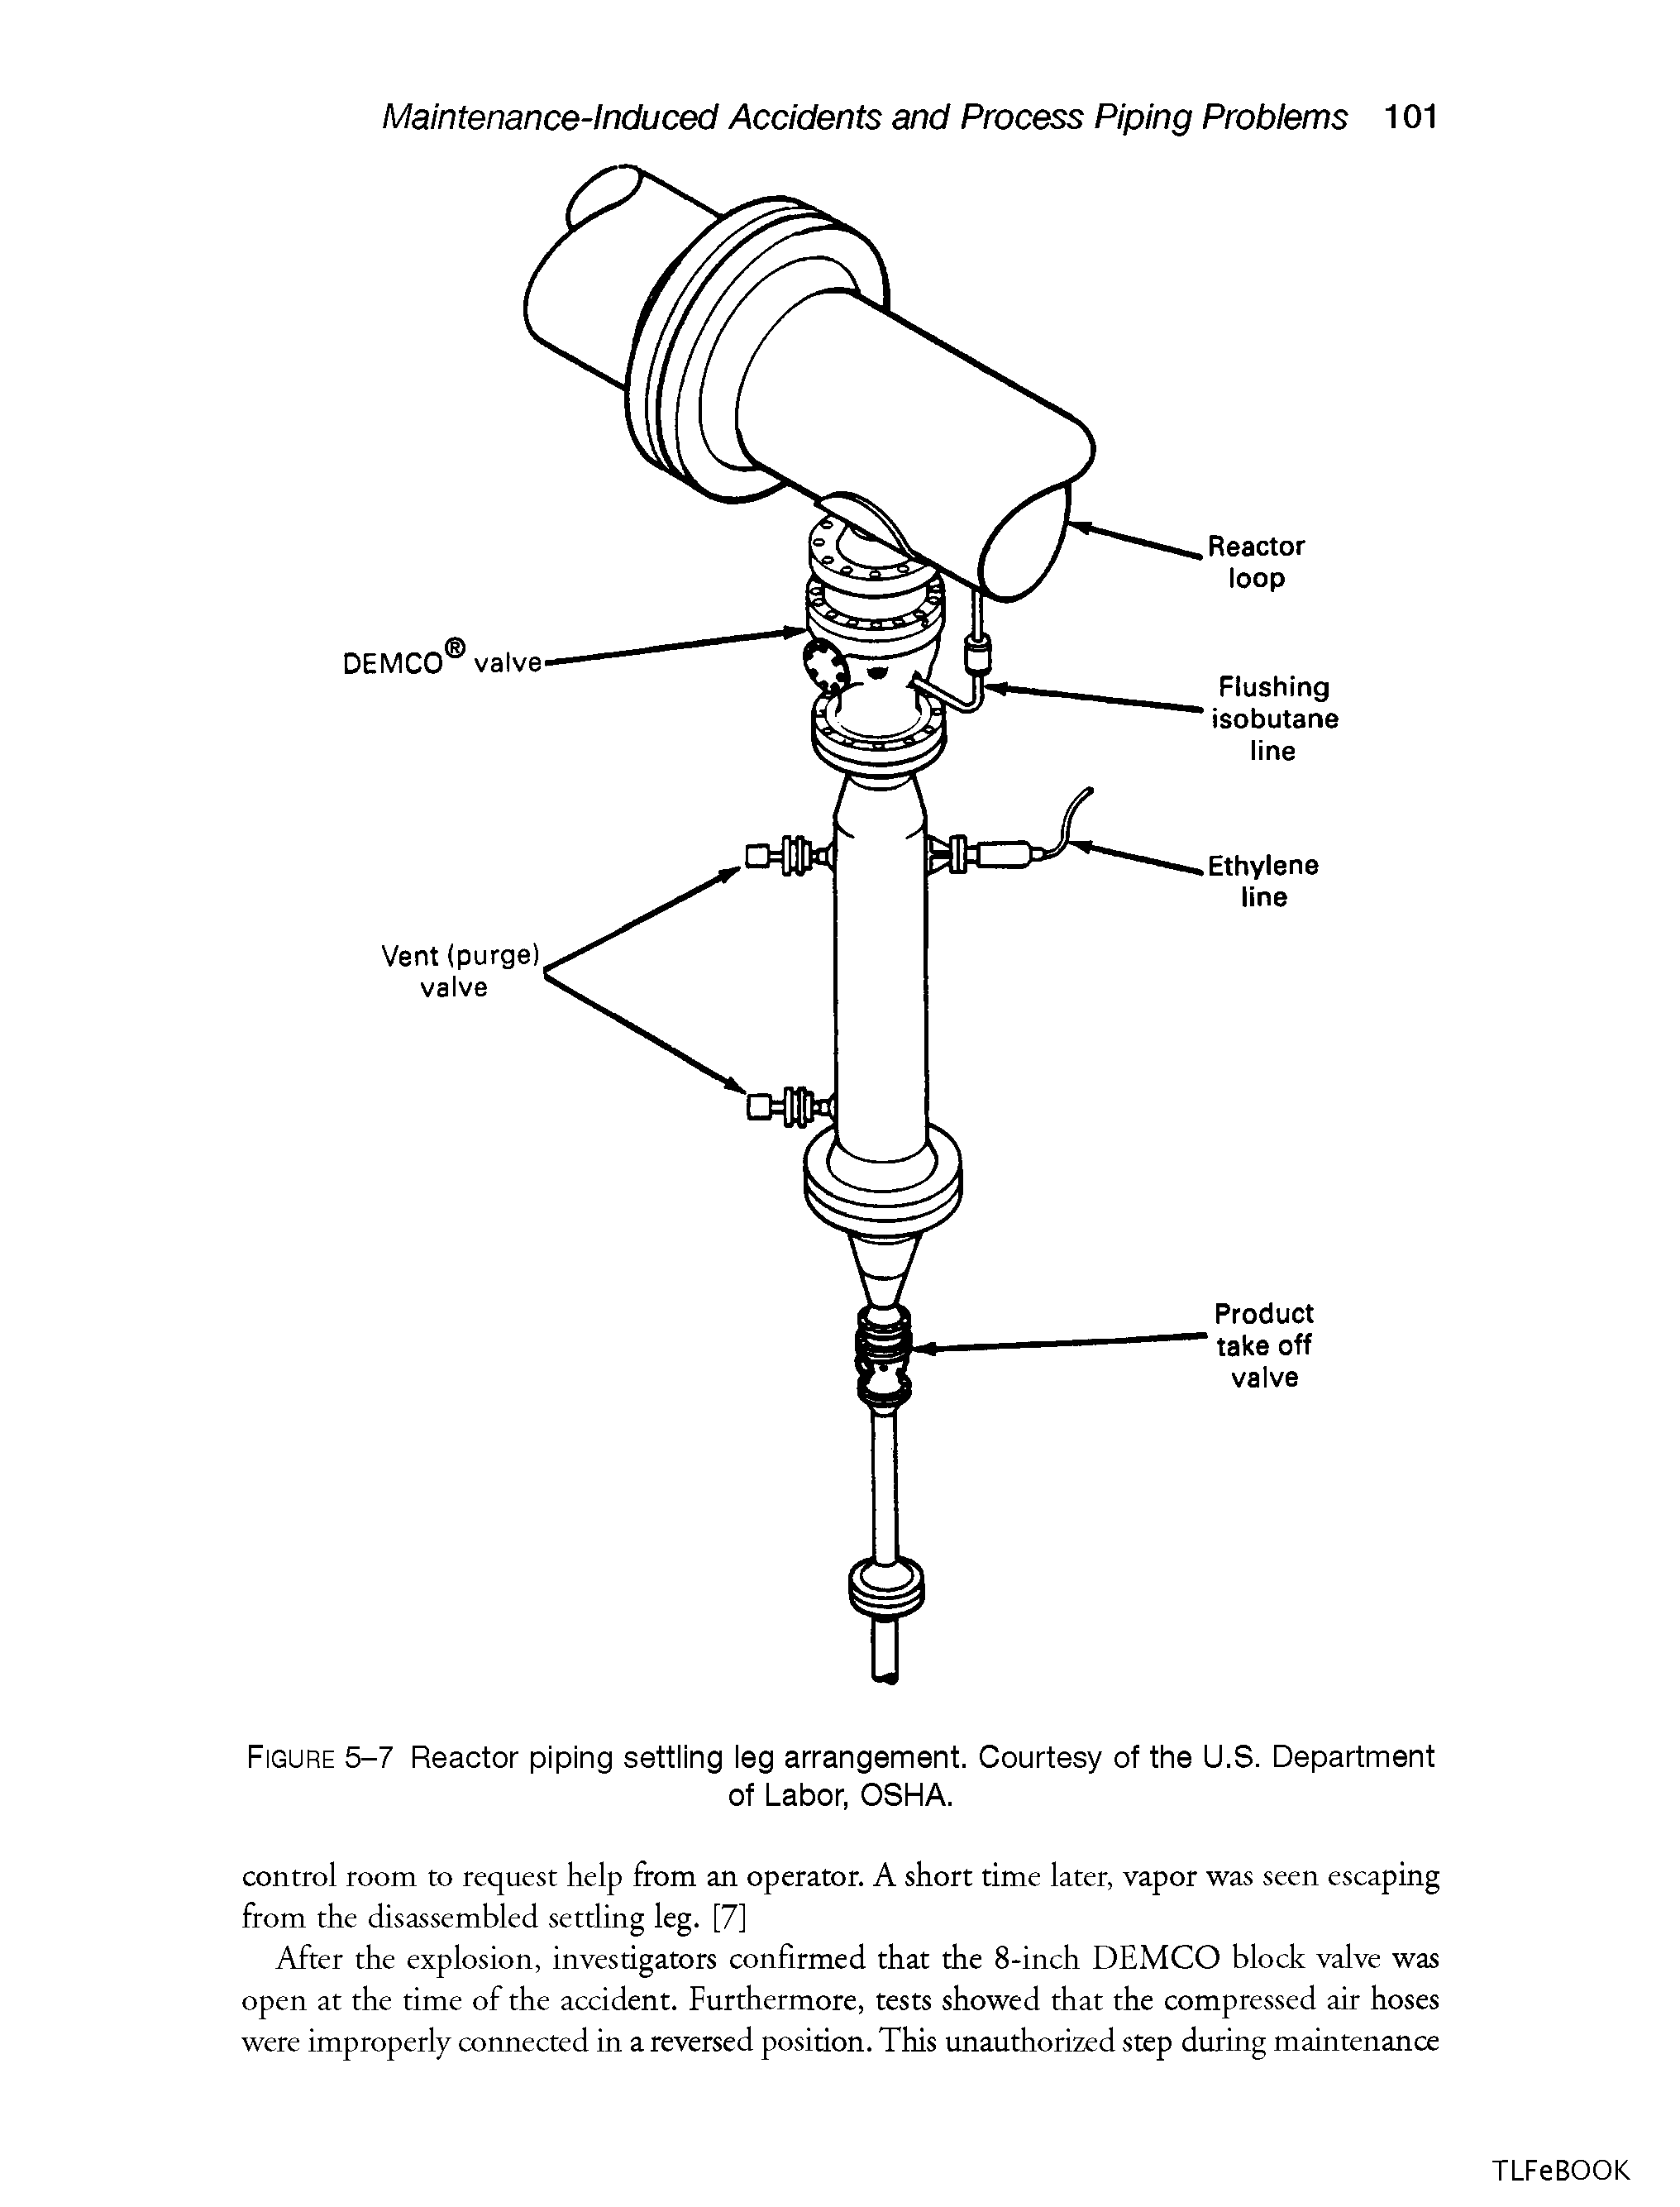 Figure 5-7 Reactor piping settling leg arrangement. Courtesy of the U.S. Department...